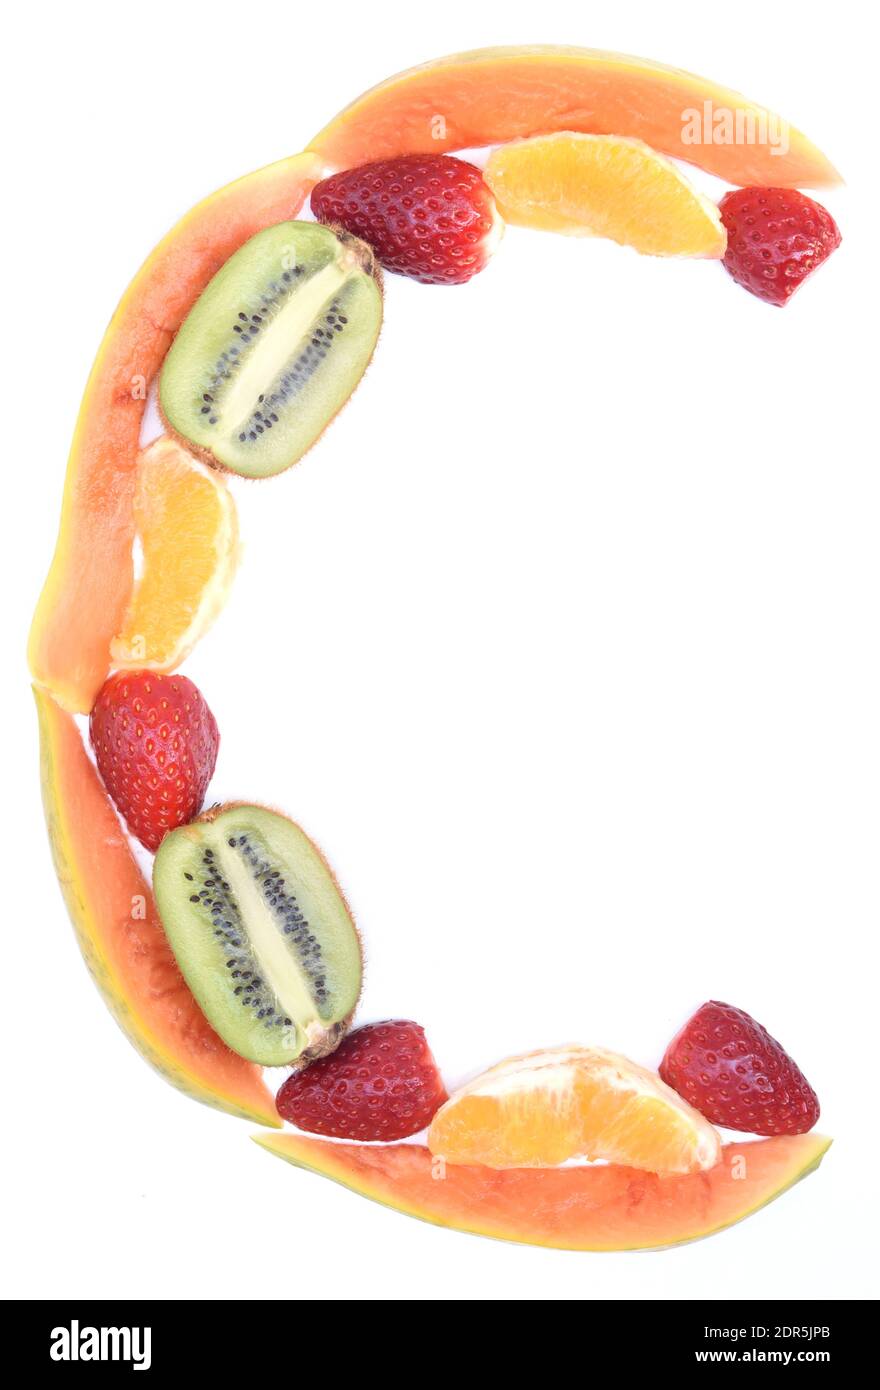 C shape letter made from fruits high in vitamin C - orange, kiwi, strawberry and papaya on white background. Stock Photo